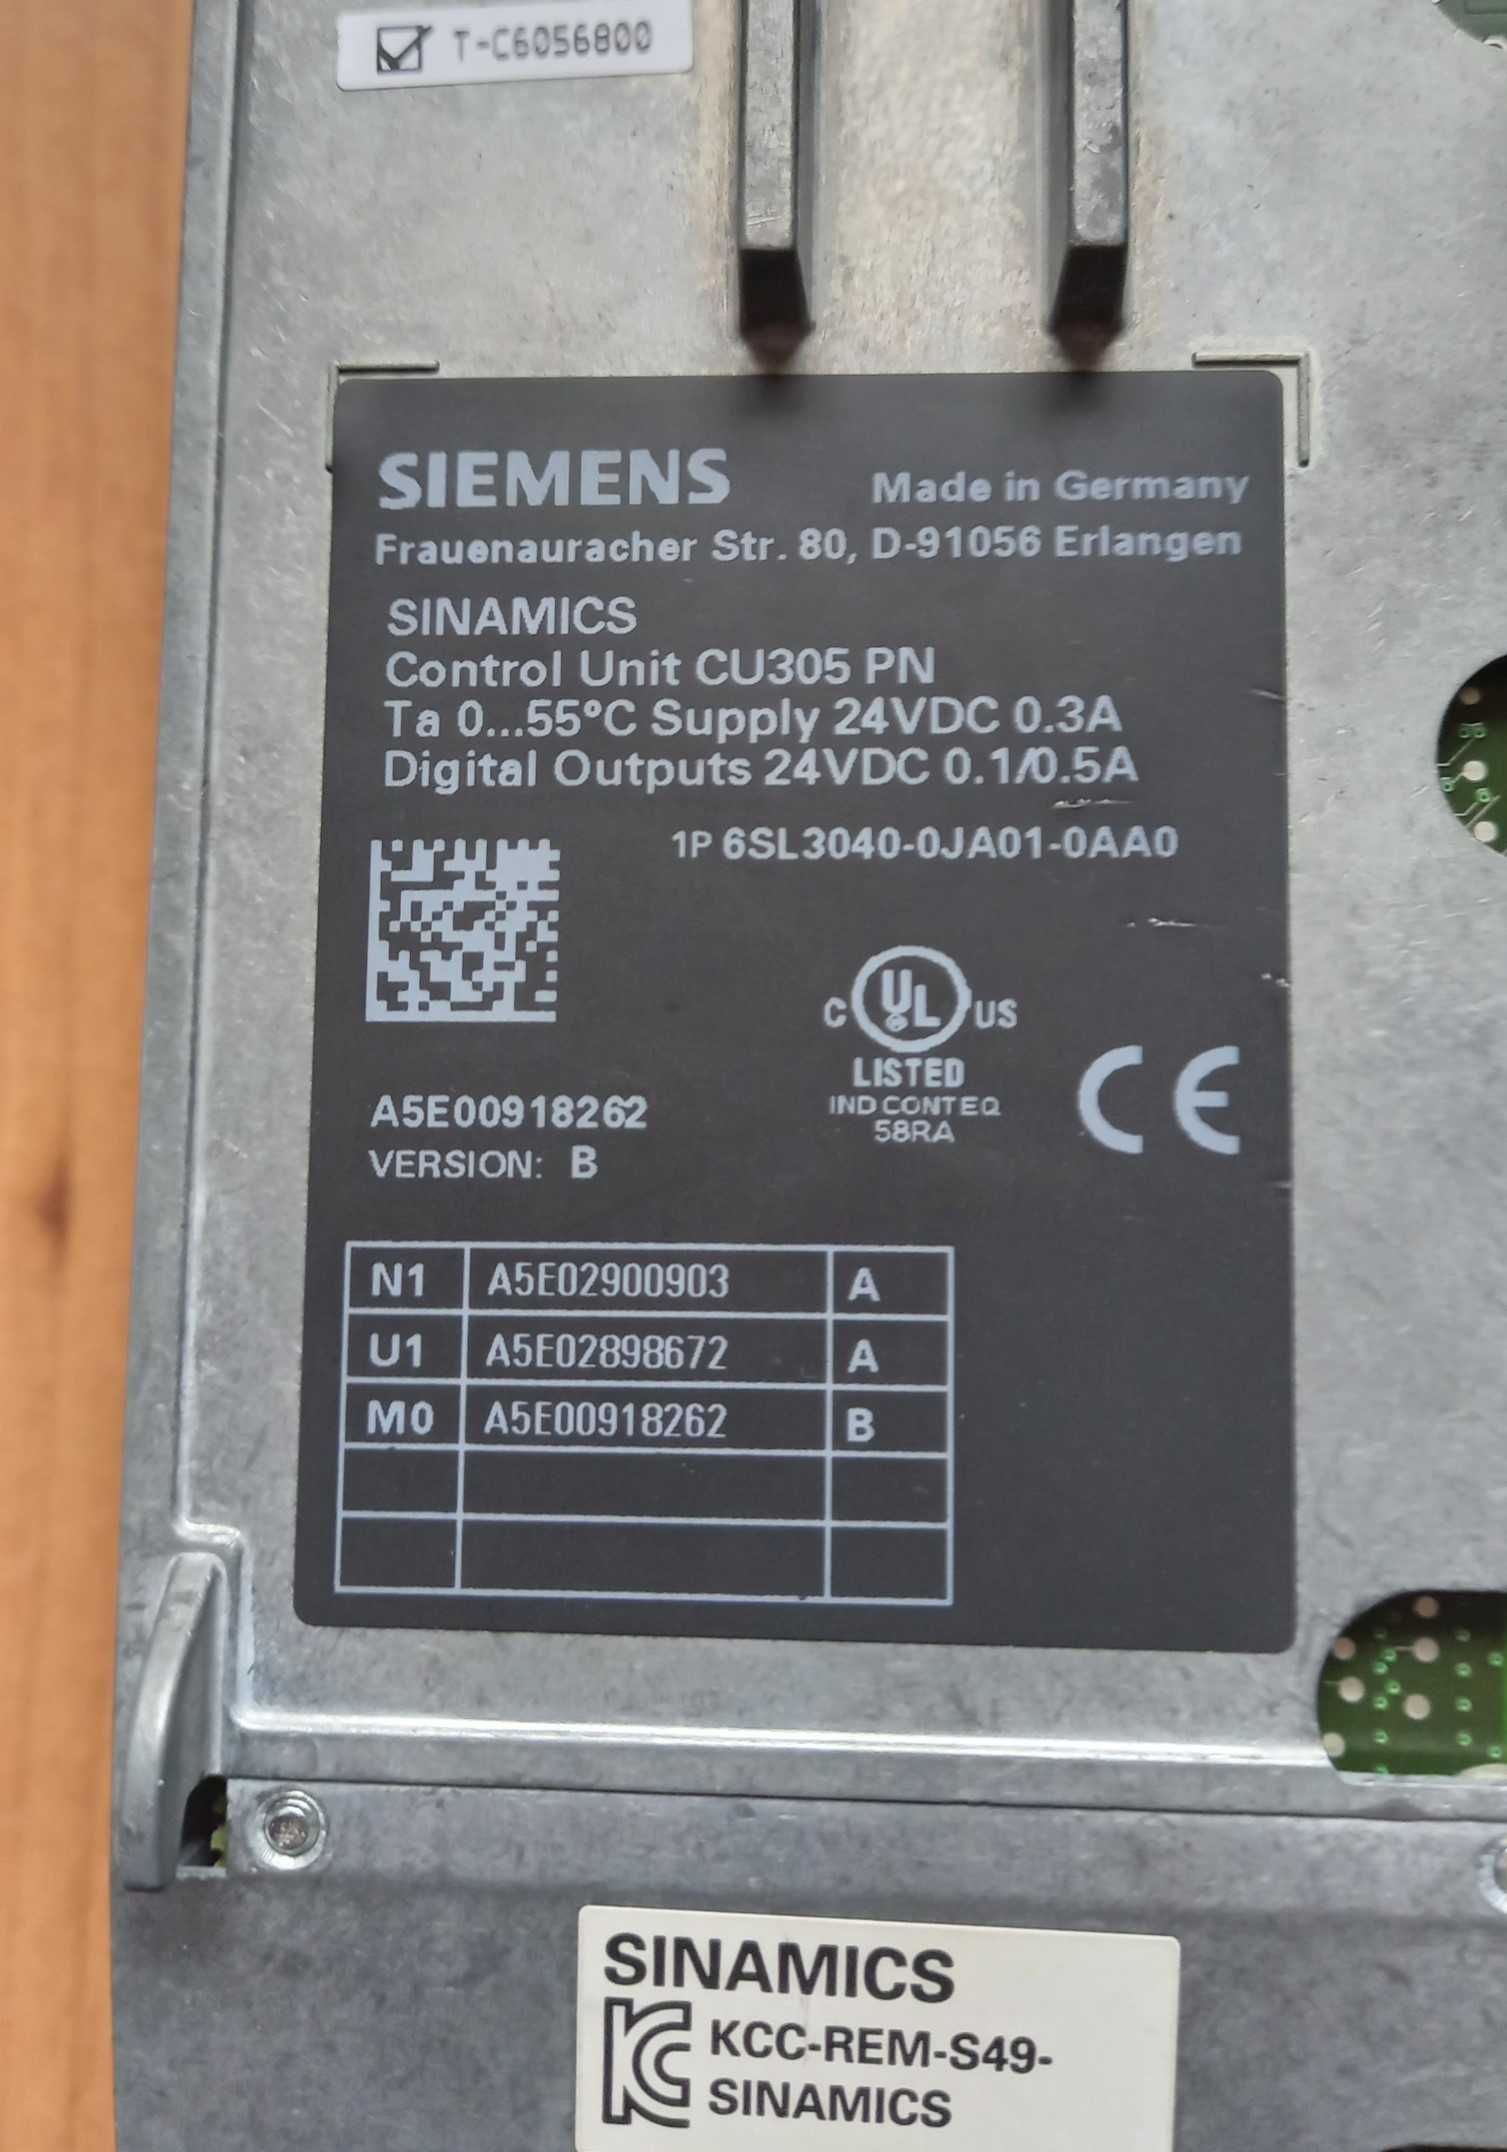 Siemens, Sinamics CU305 PN, PM340, CU320-2DP, Double Motor Module